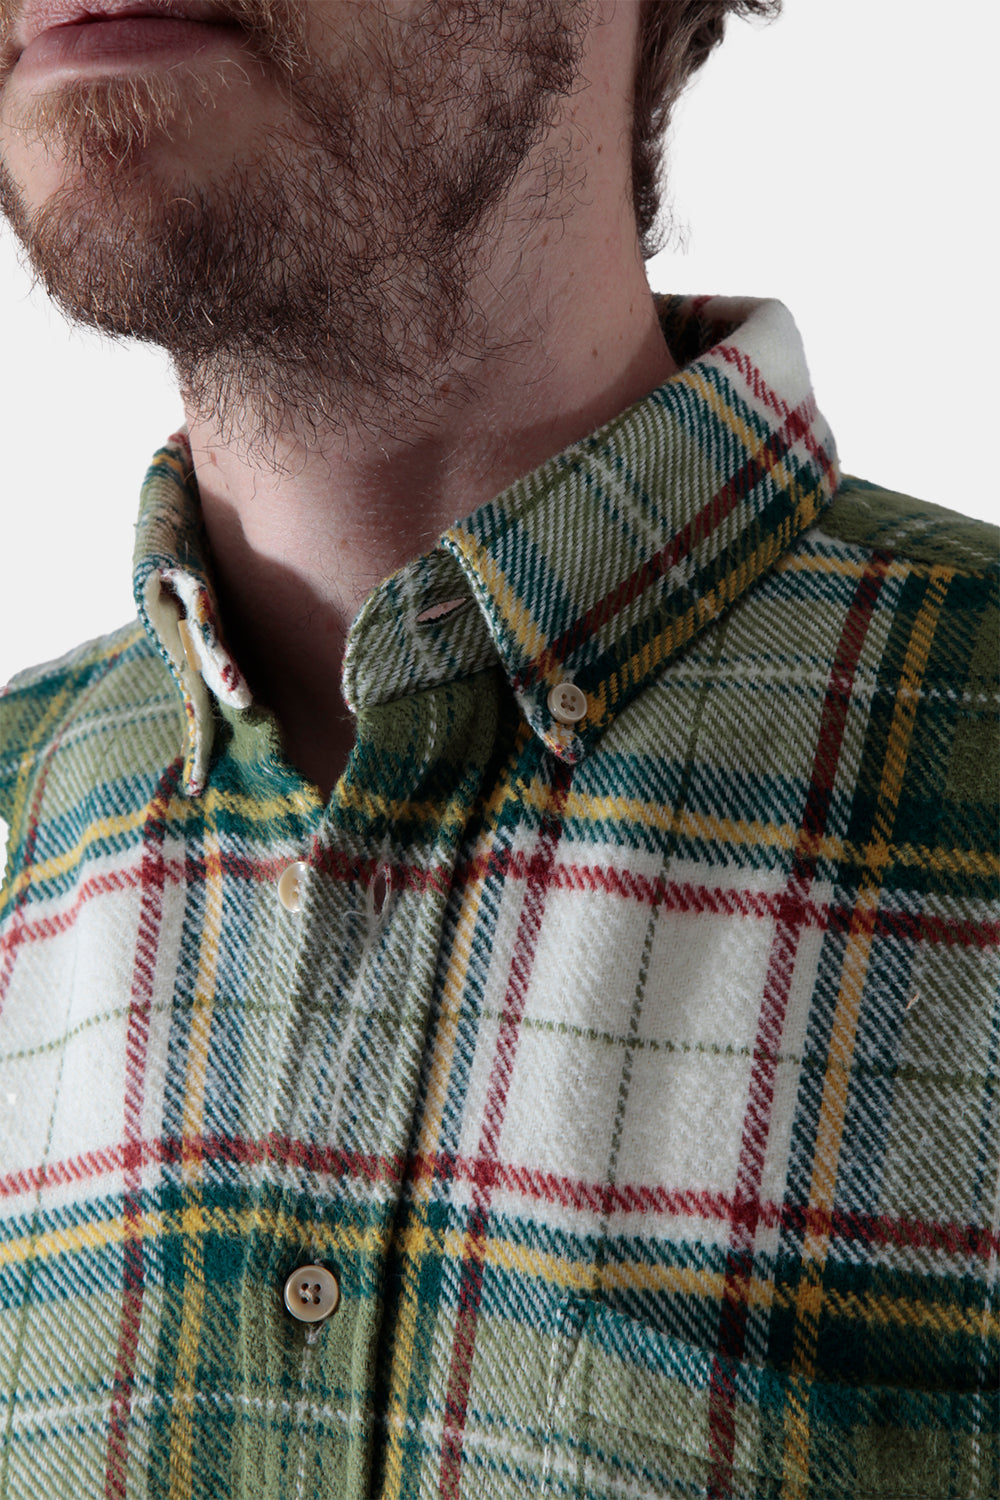 Portuguese Flannel Portlad Check Shirt (Ecru / Green) | Number Six